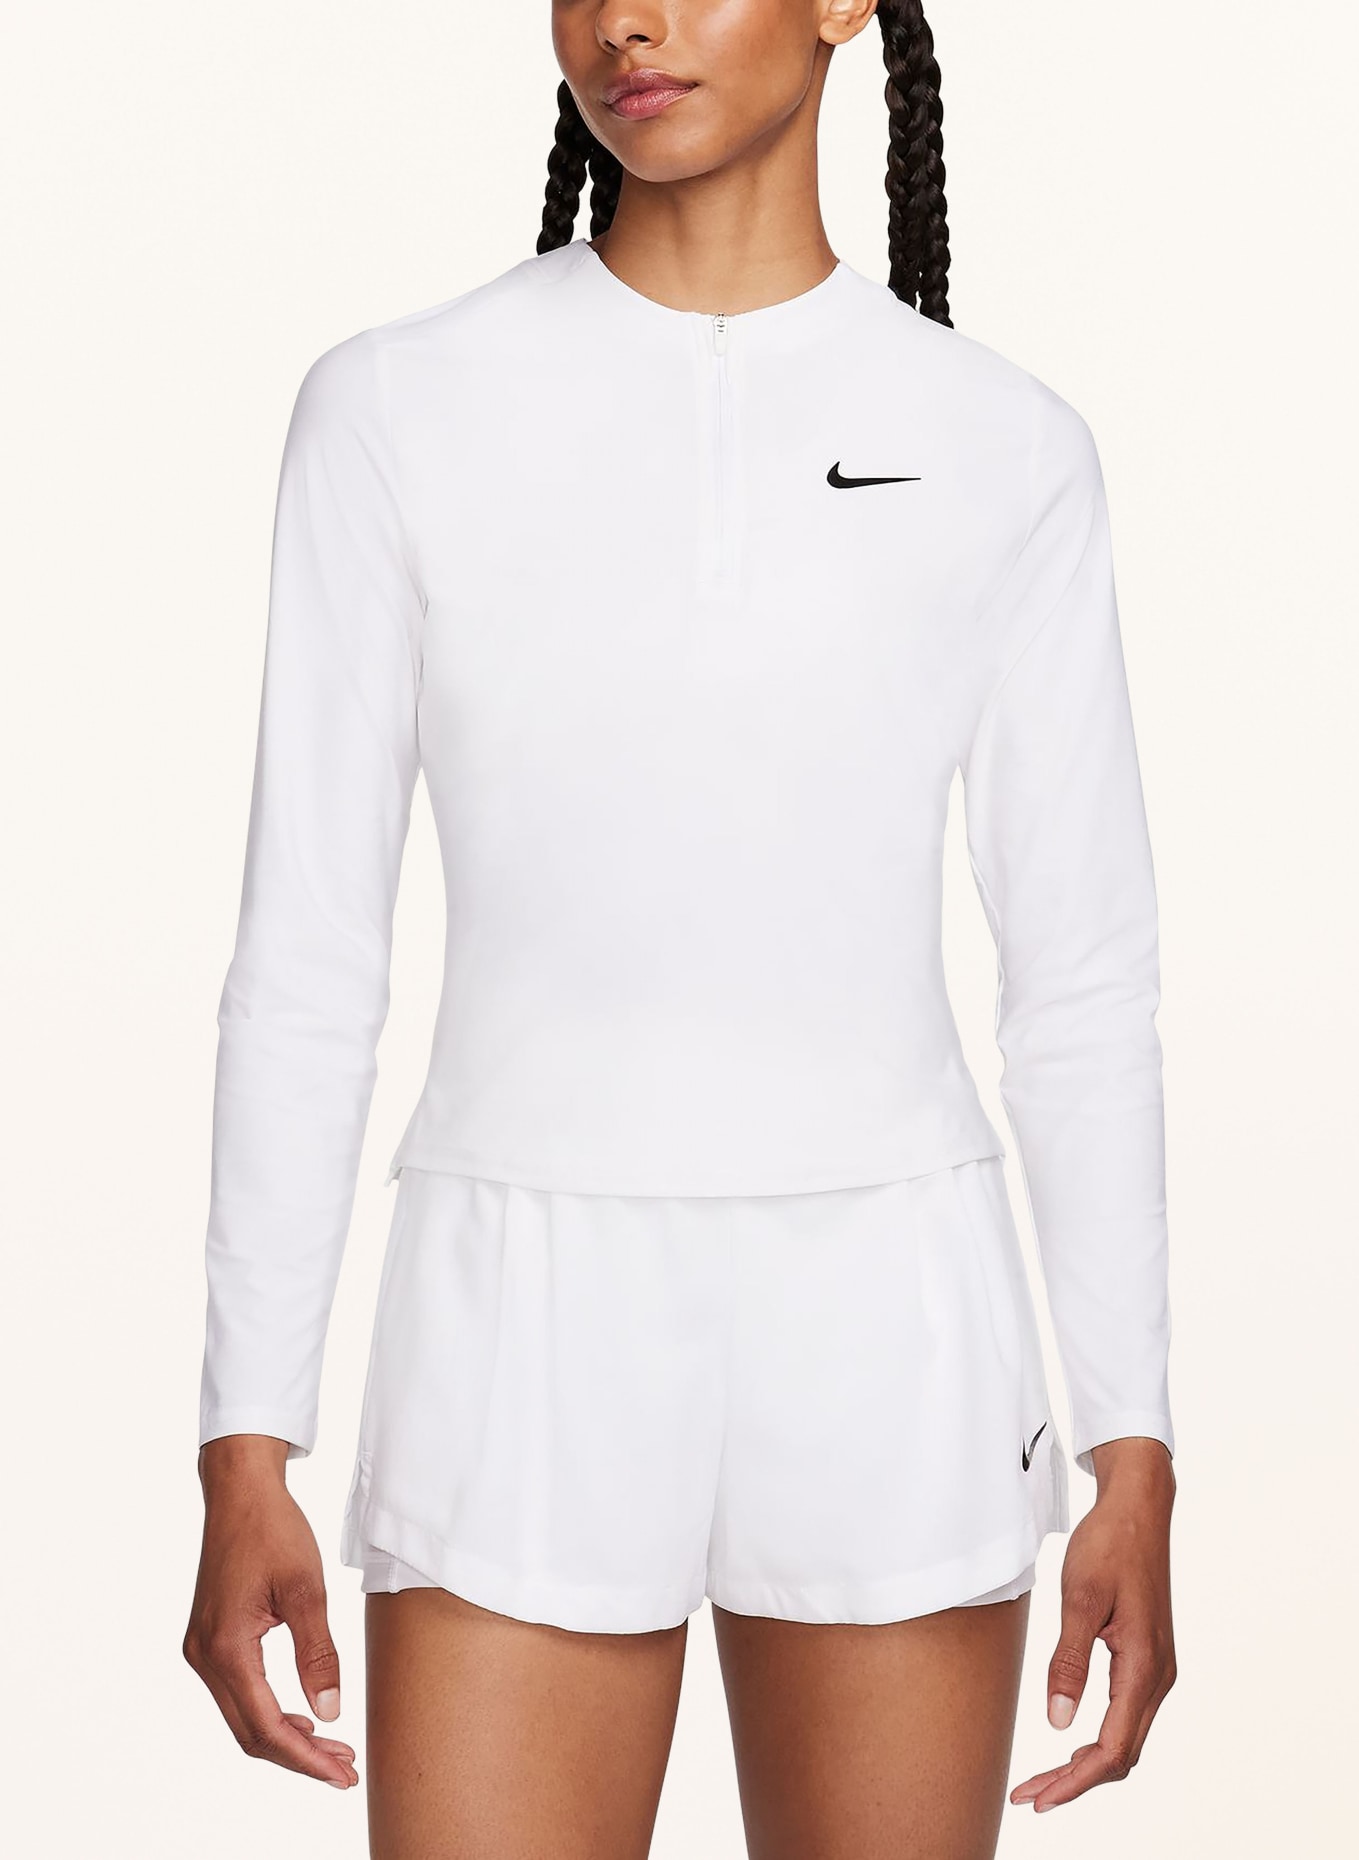 Nike Long sleeve shirt COURT ADVANTAGE DRI FIT in white